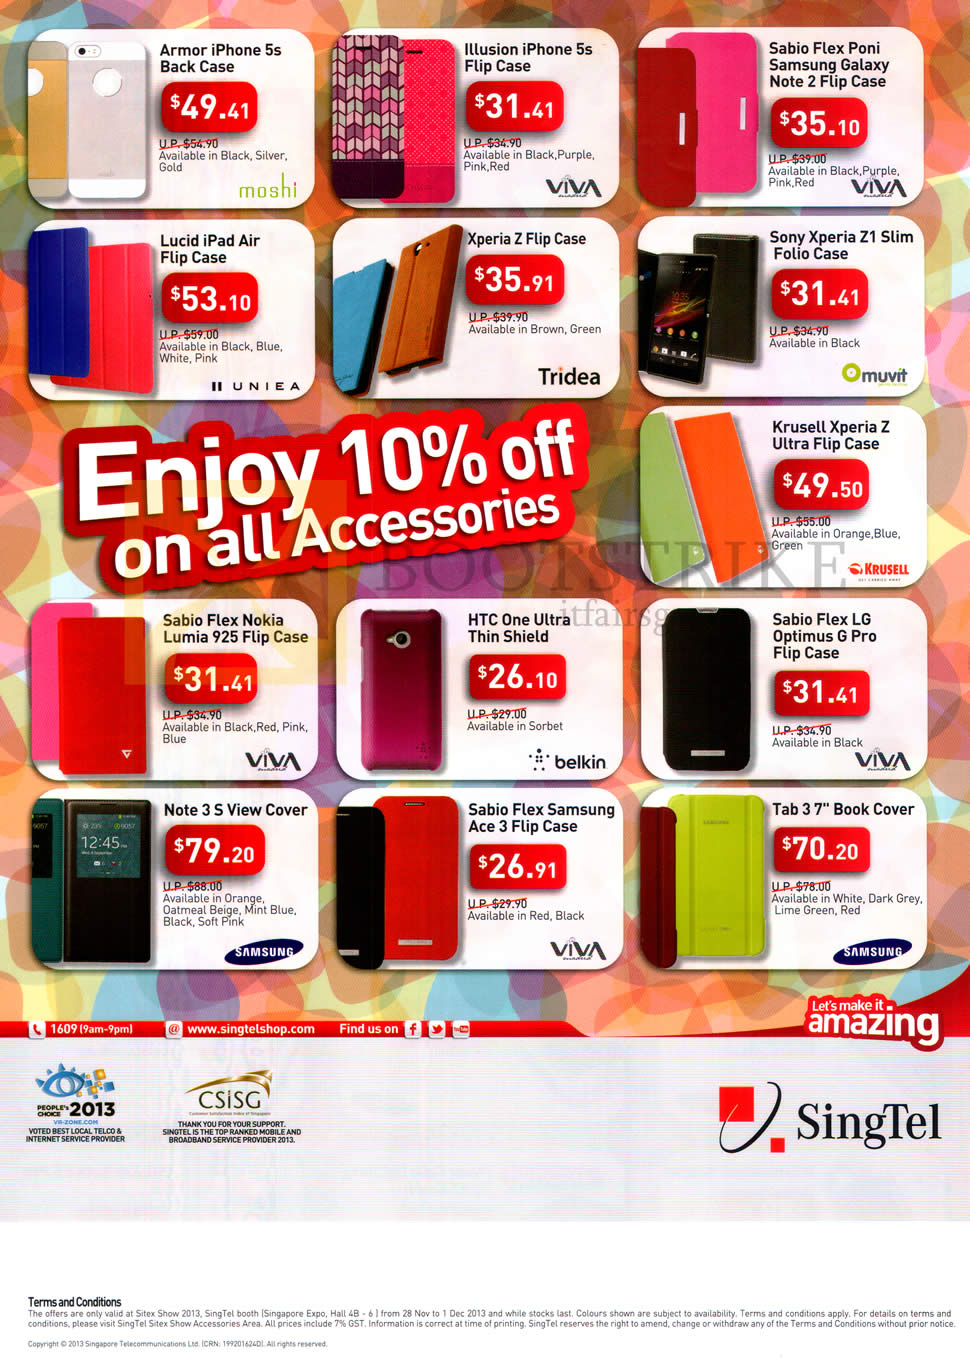 SITEX 2013 price list image brochure of Singtel Accessories, Case, Sabio, Sony, Armor, Folio